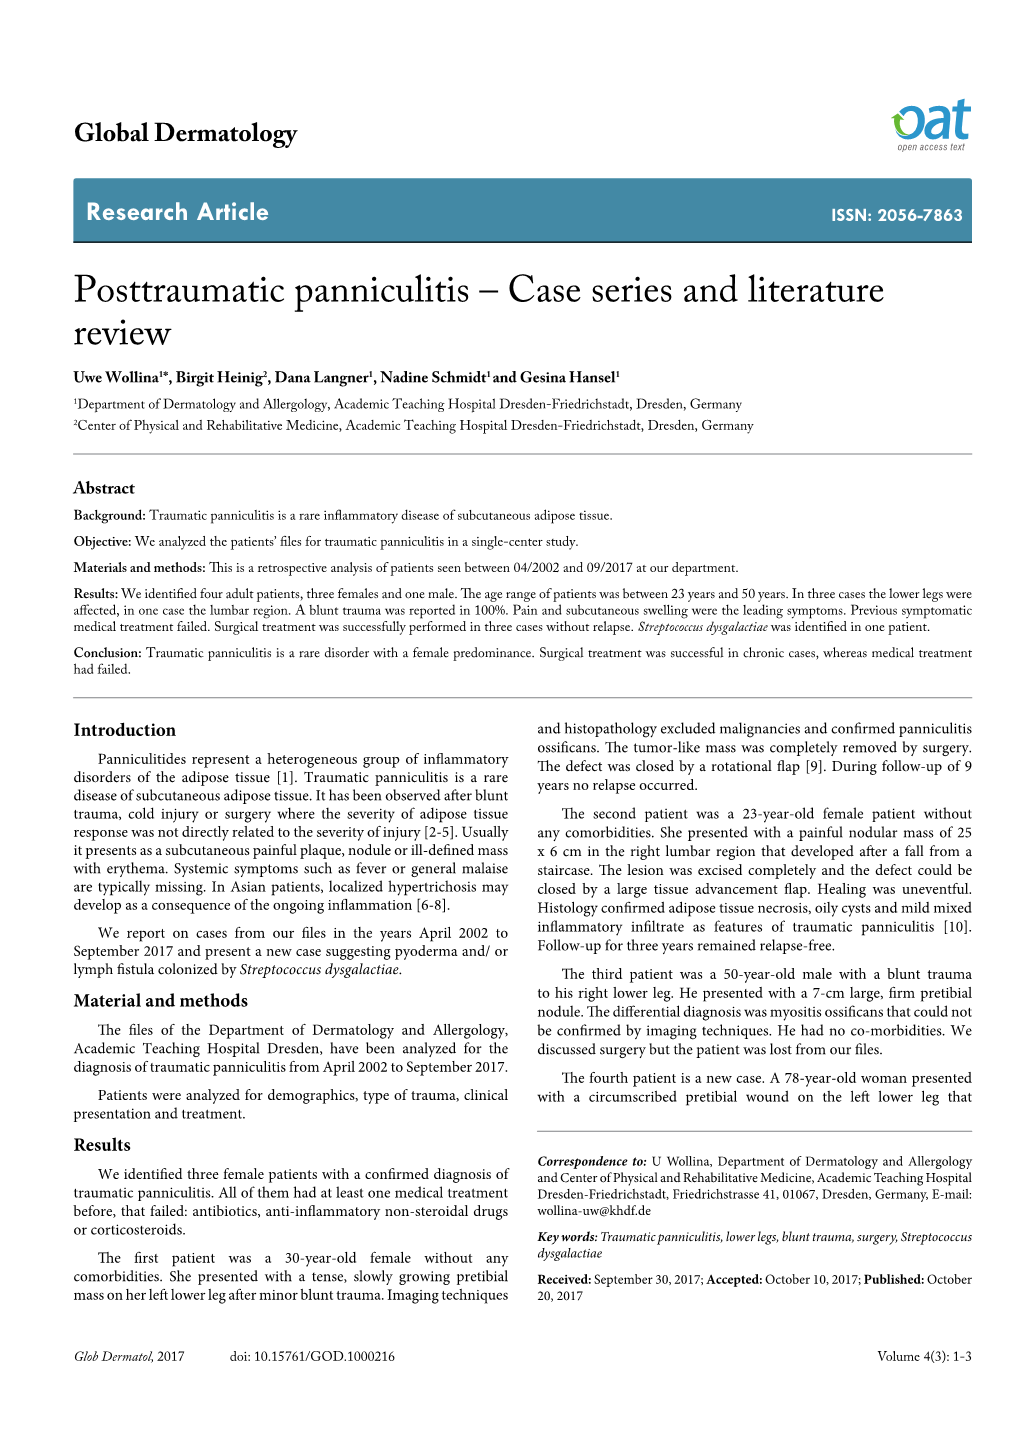 Posttraumatic Panniculitis